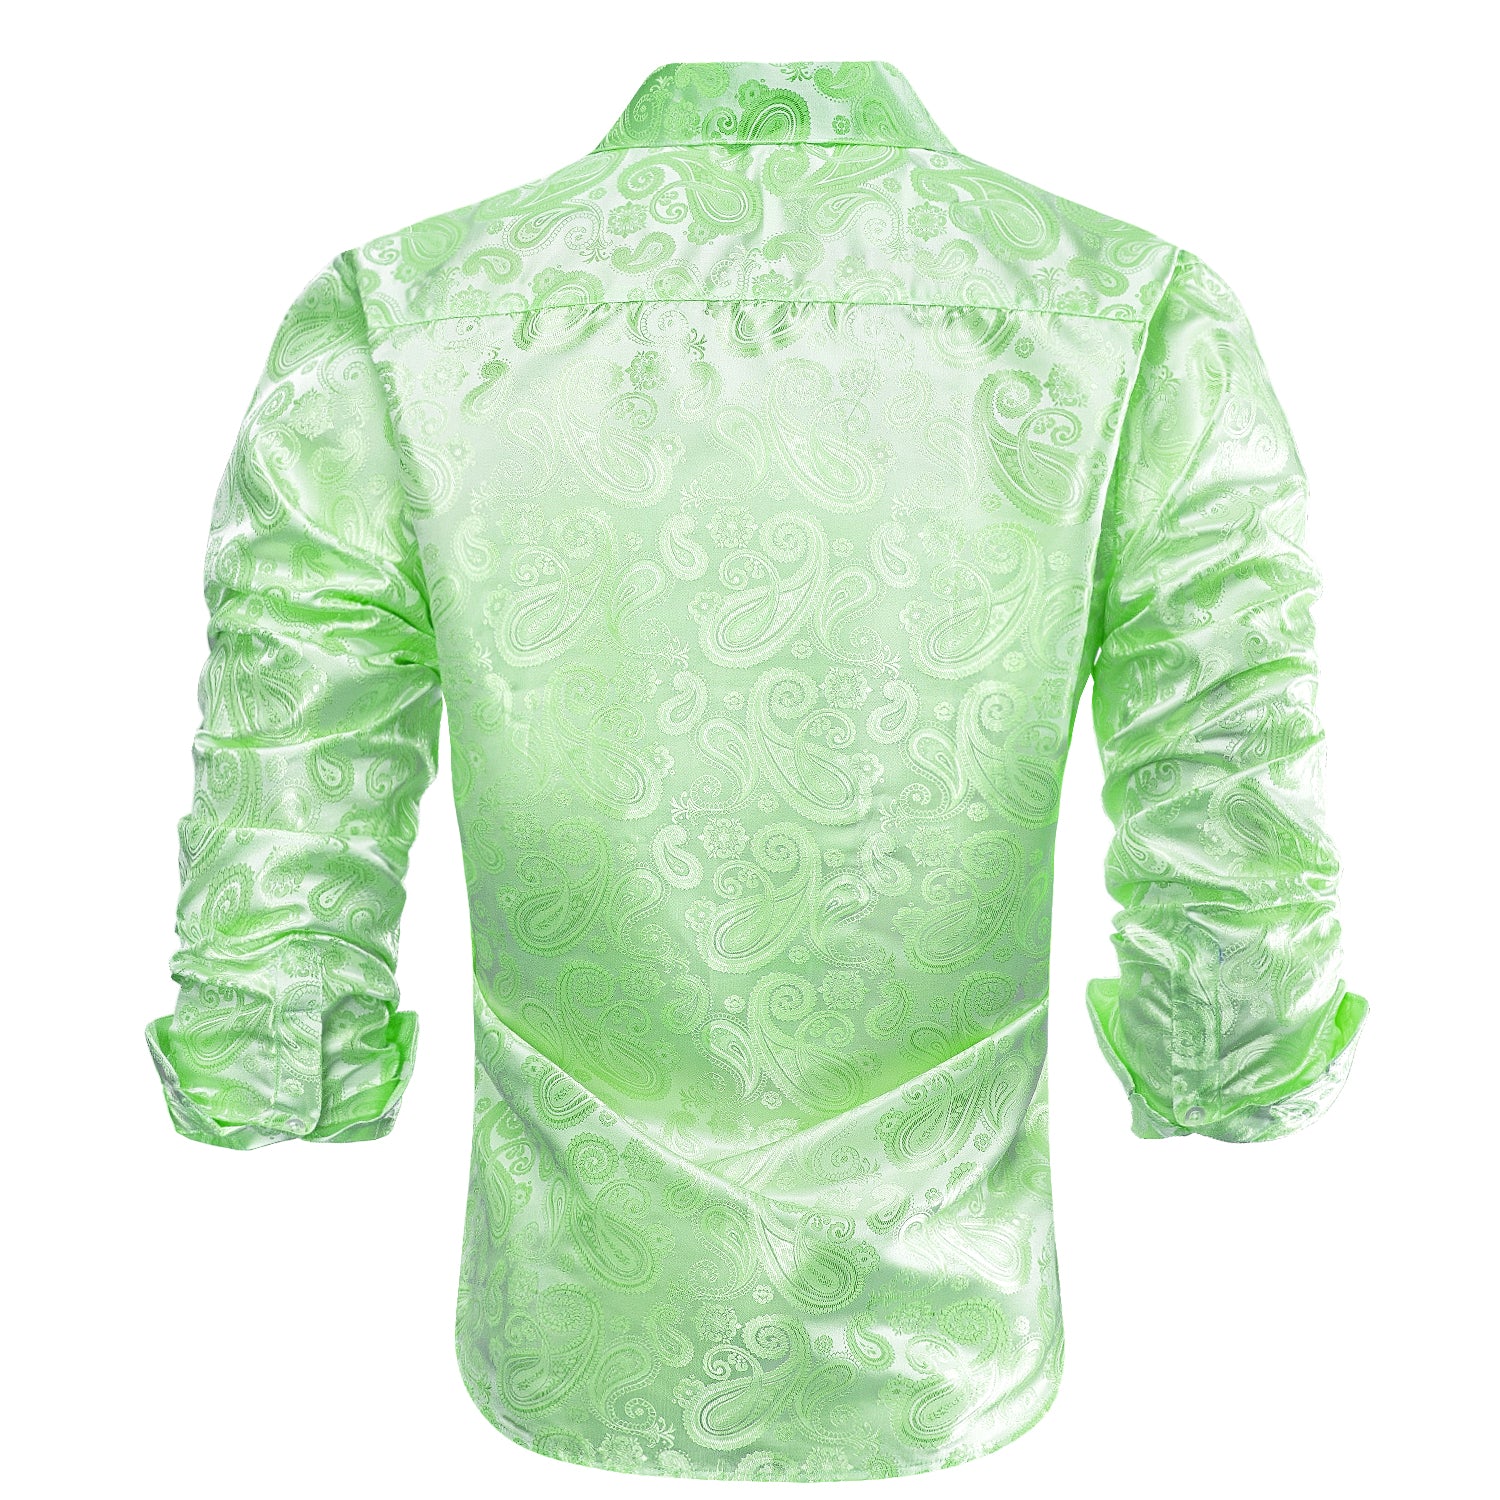 Apple Green Paisley Silk Men's Long Sleeve Shirt Casual